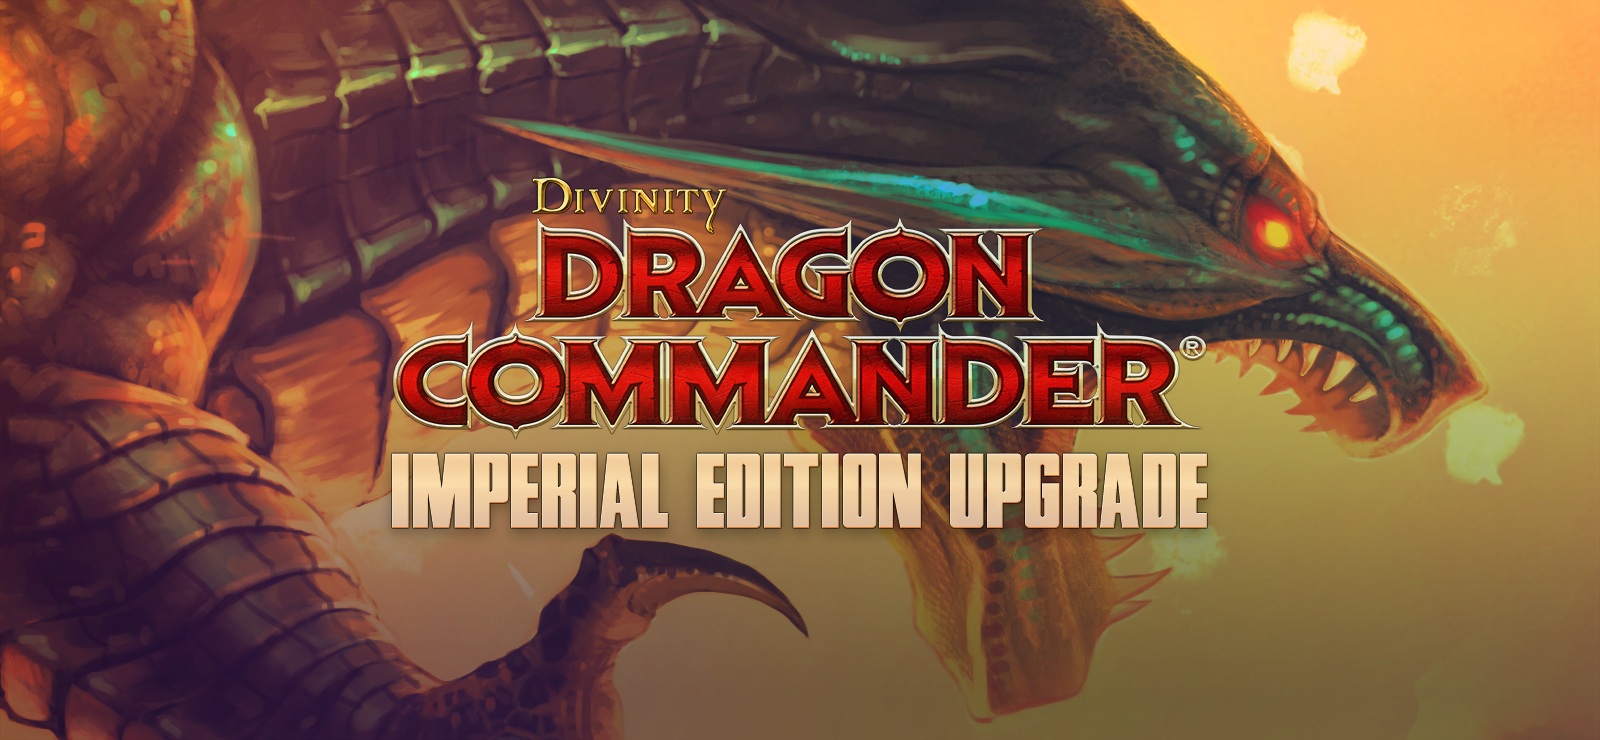 Divinity: Dragon Commander Imperial Edition Upgrade